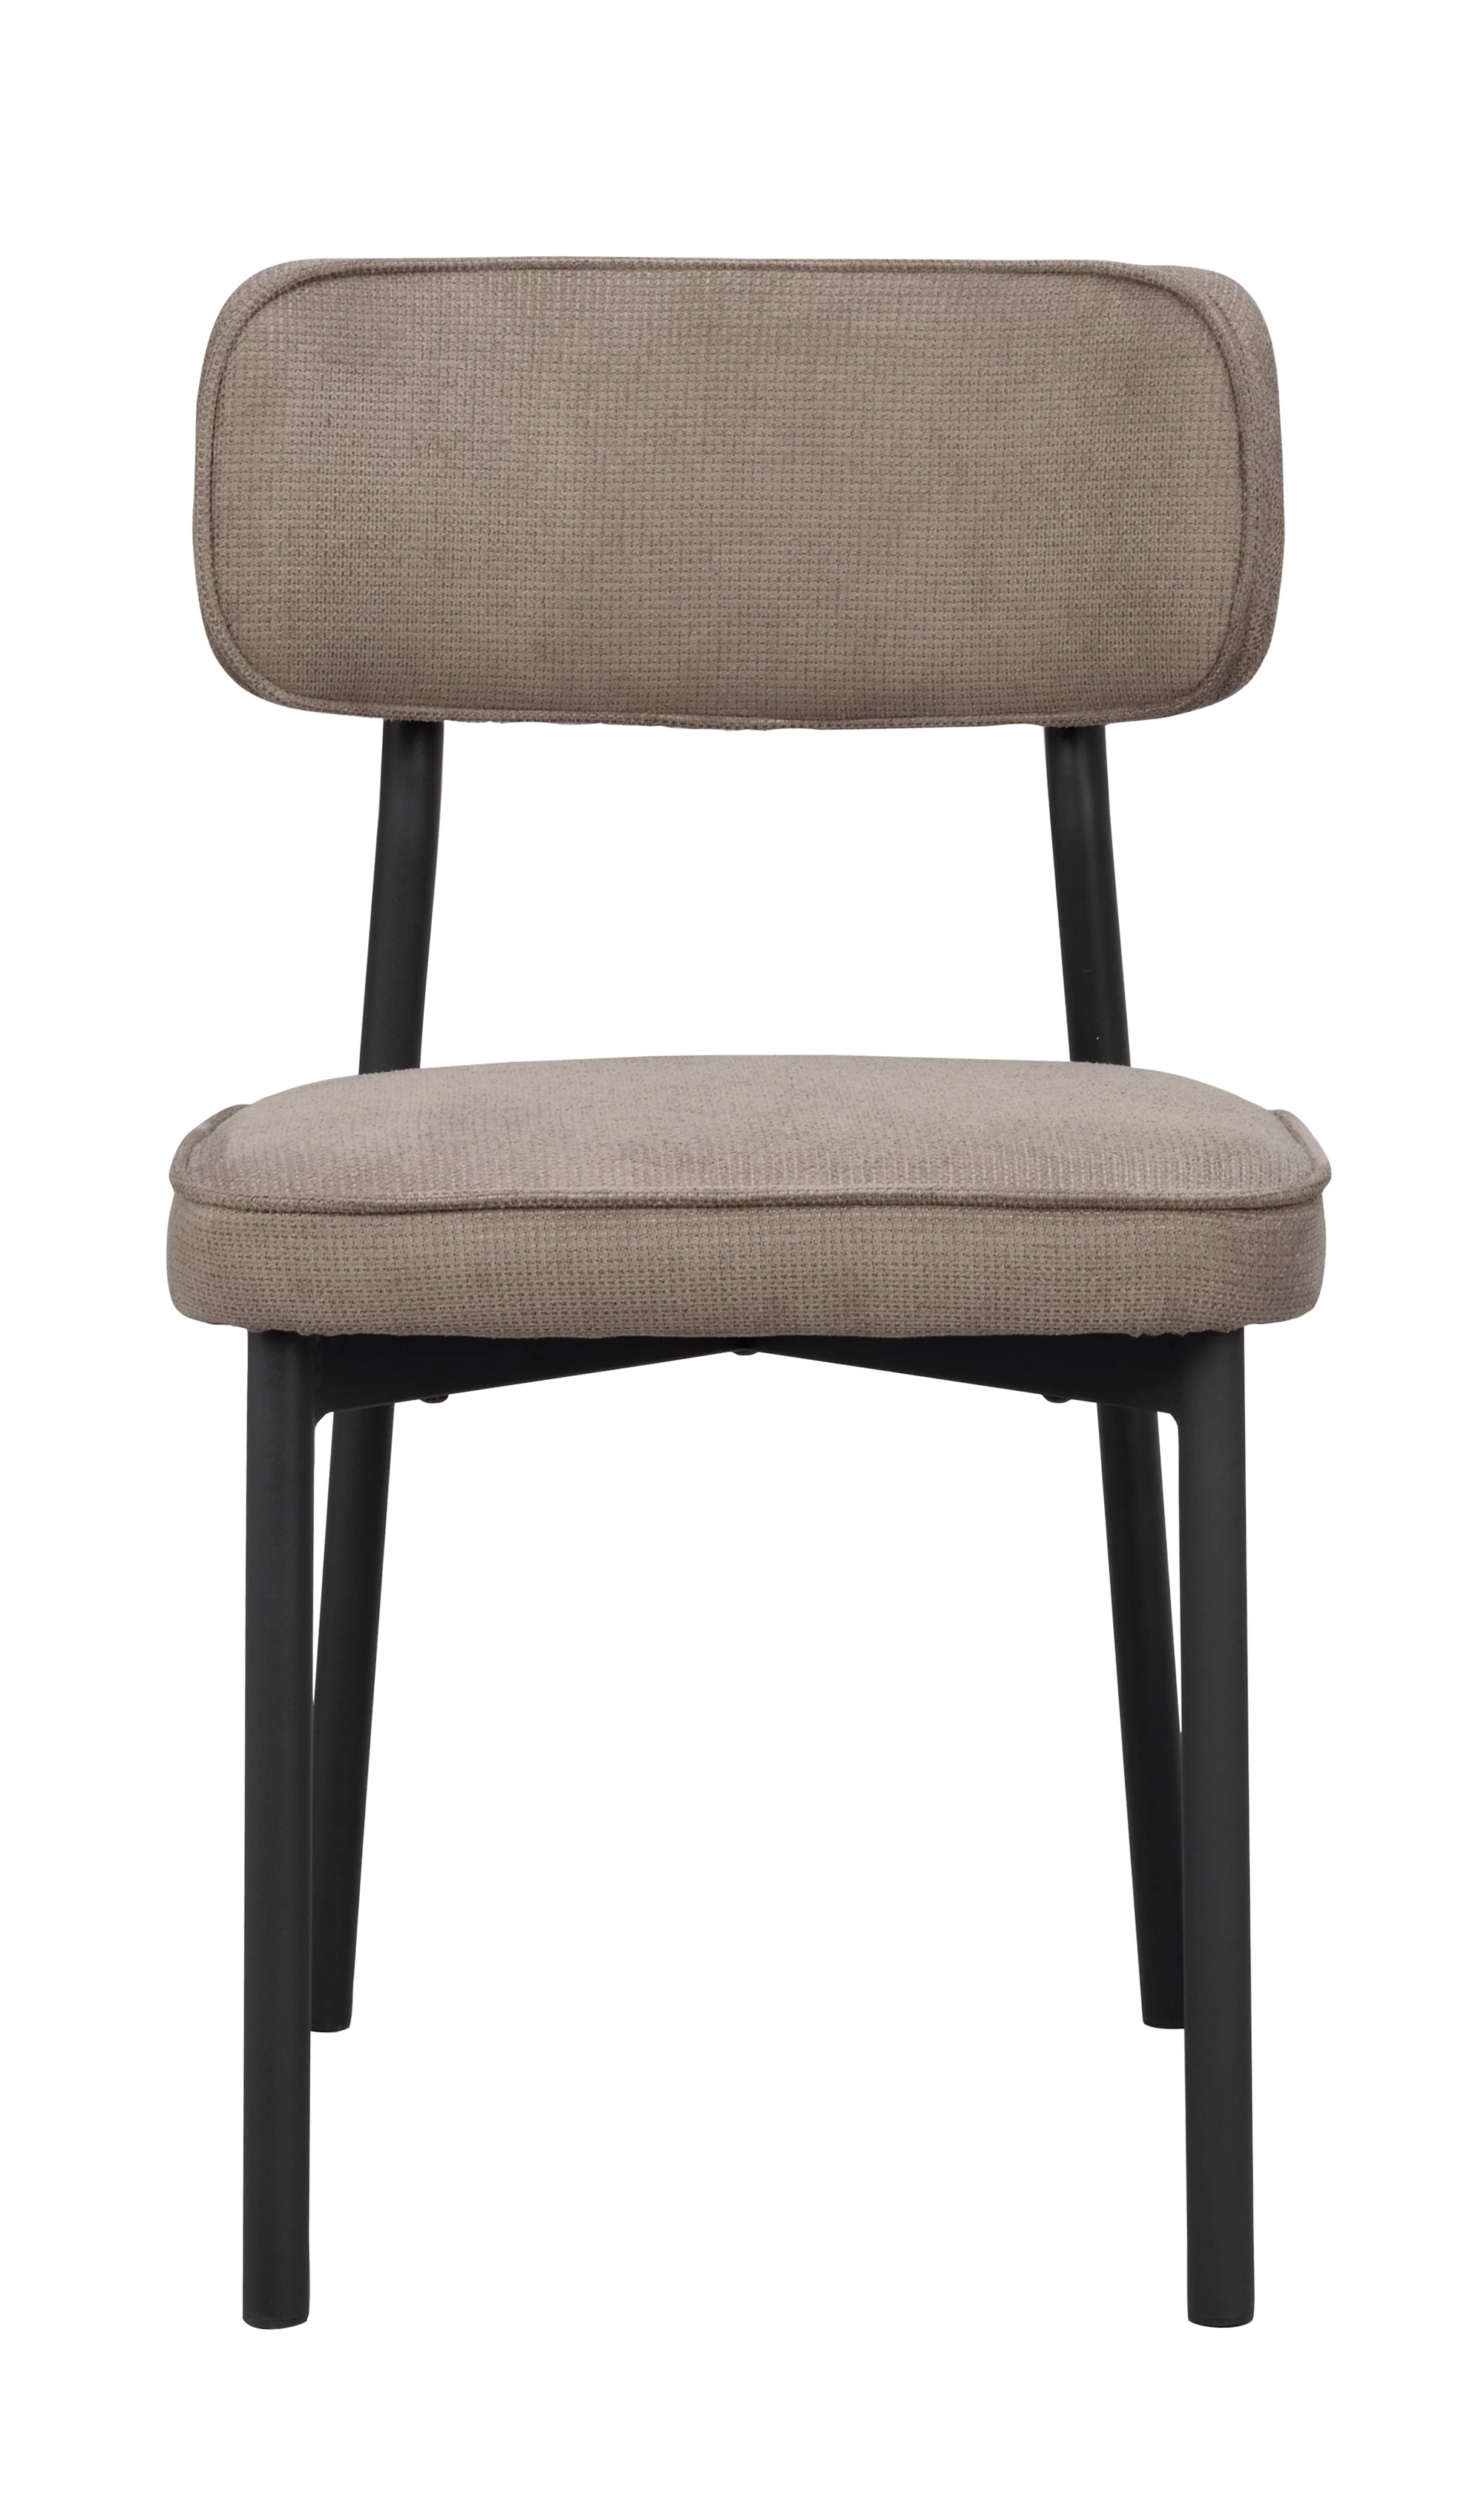 ROWICO Paisley spisebordsstol - gråbrun RPET stof og sort metal